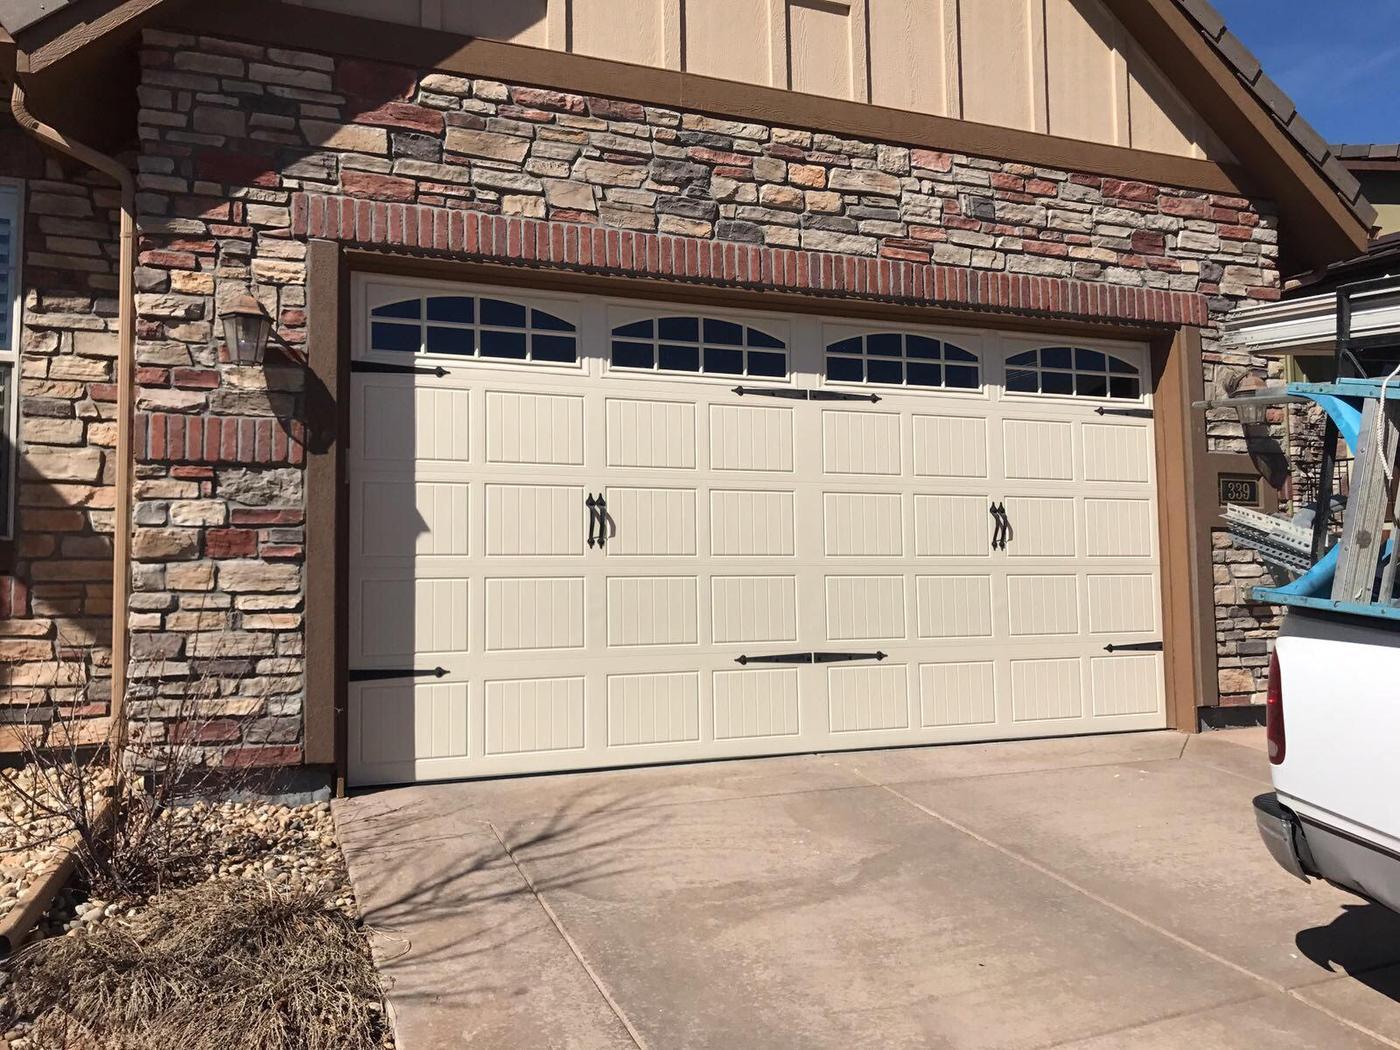  Garage Door Manufacturers Colorado for Simple Design